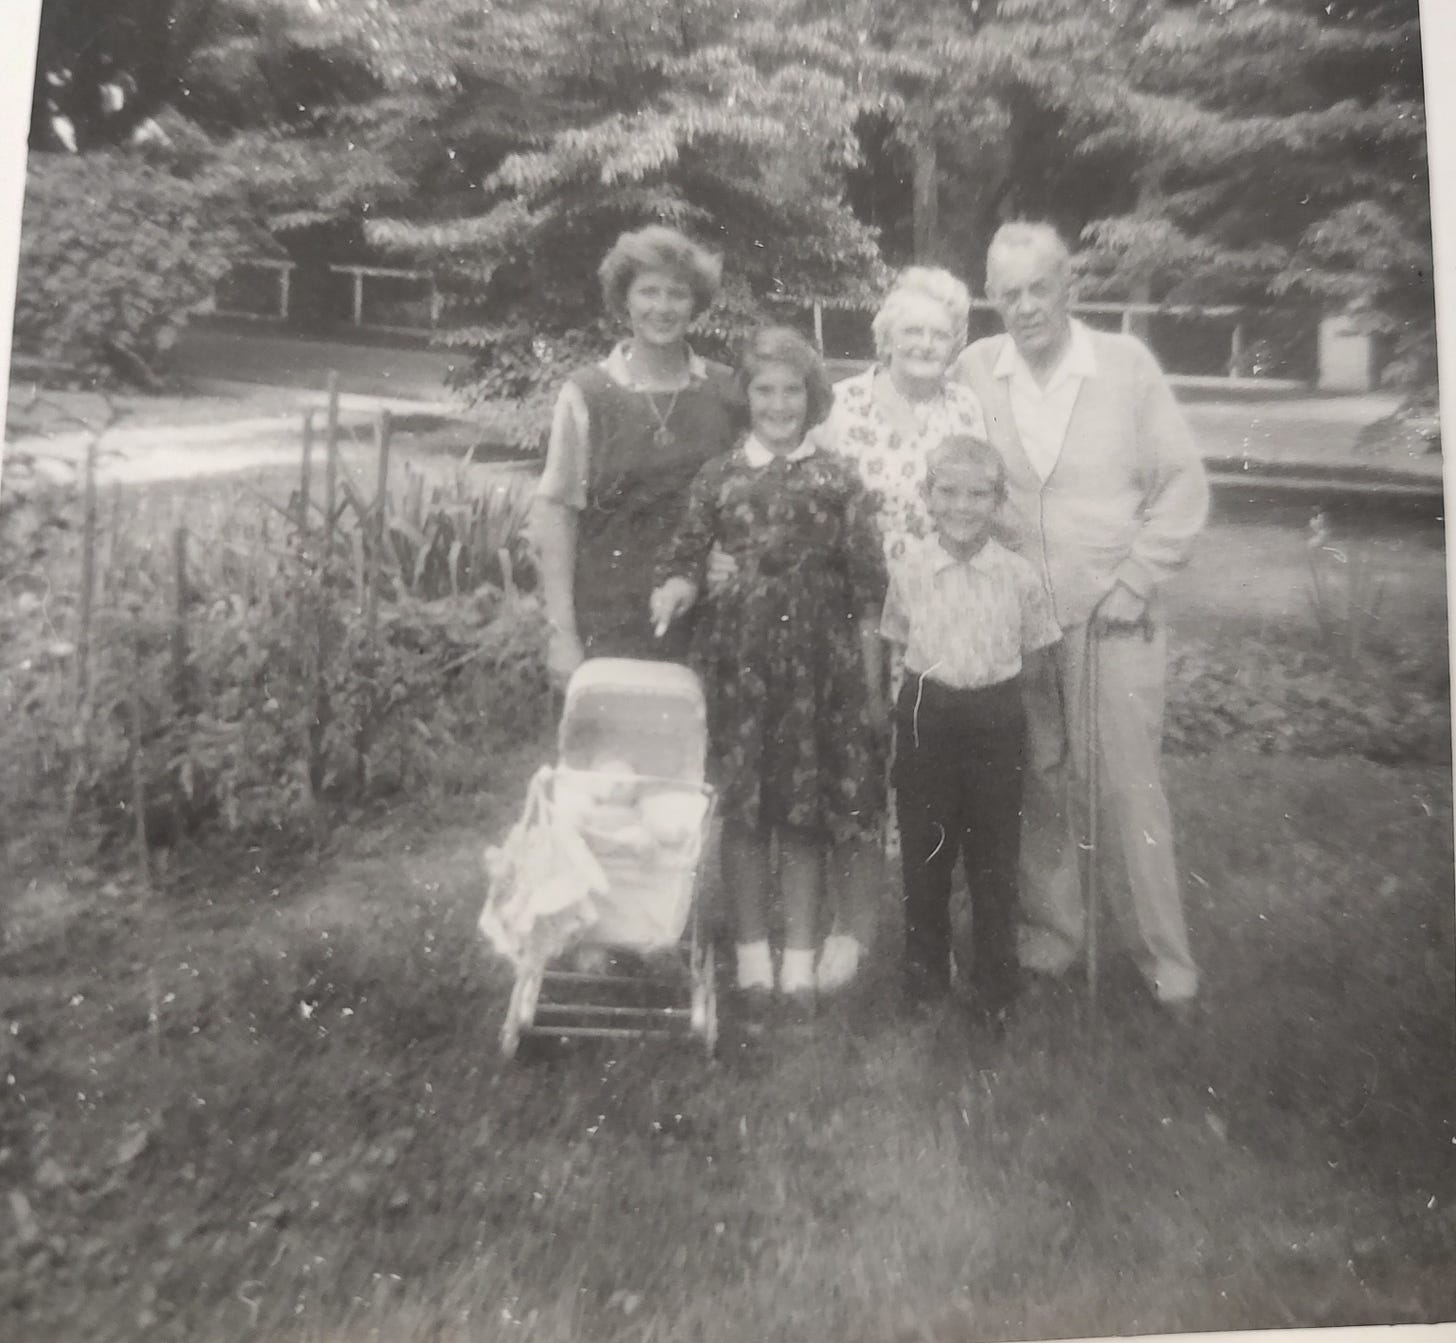 Mom, me, Grandma, Grandpa & younger brother pose in front of Grandpa's sunflower garden